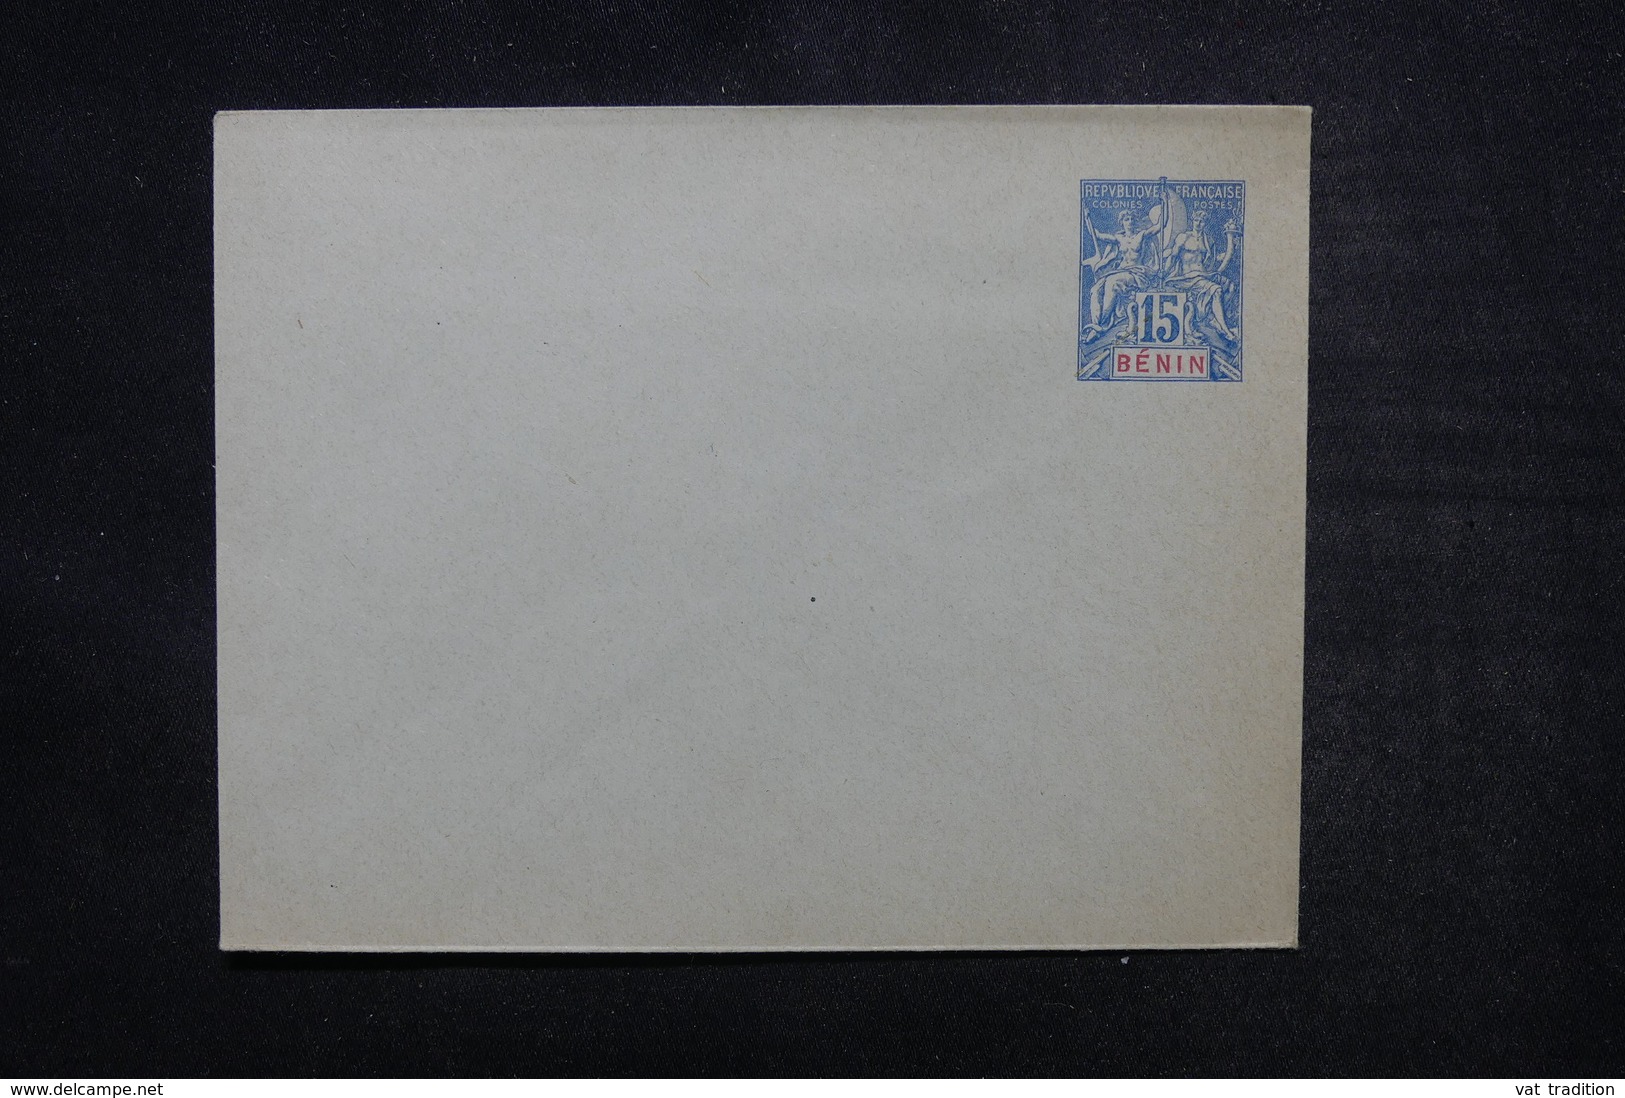 BÉNIN - Entier Postal Type Groupe - Non Circulé - L 54154 - Storia Postale